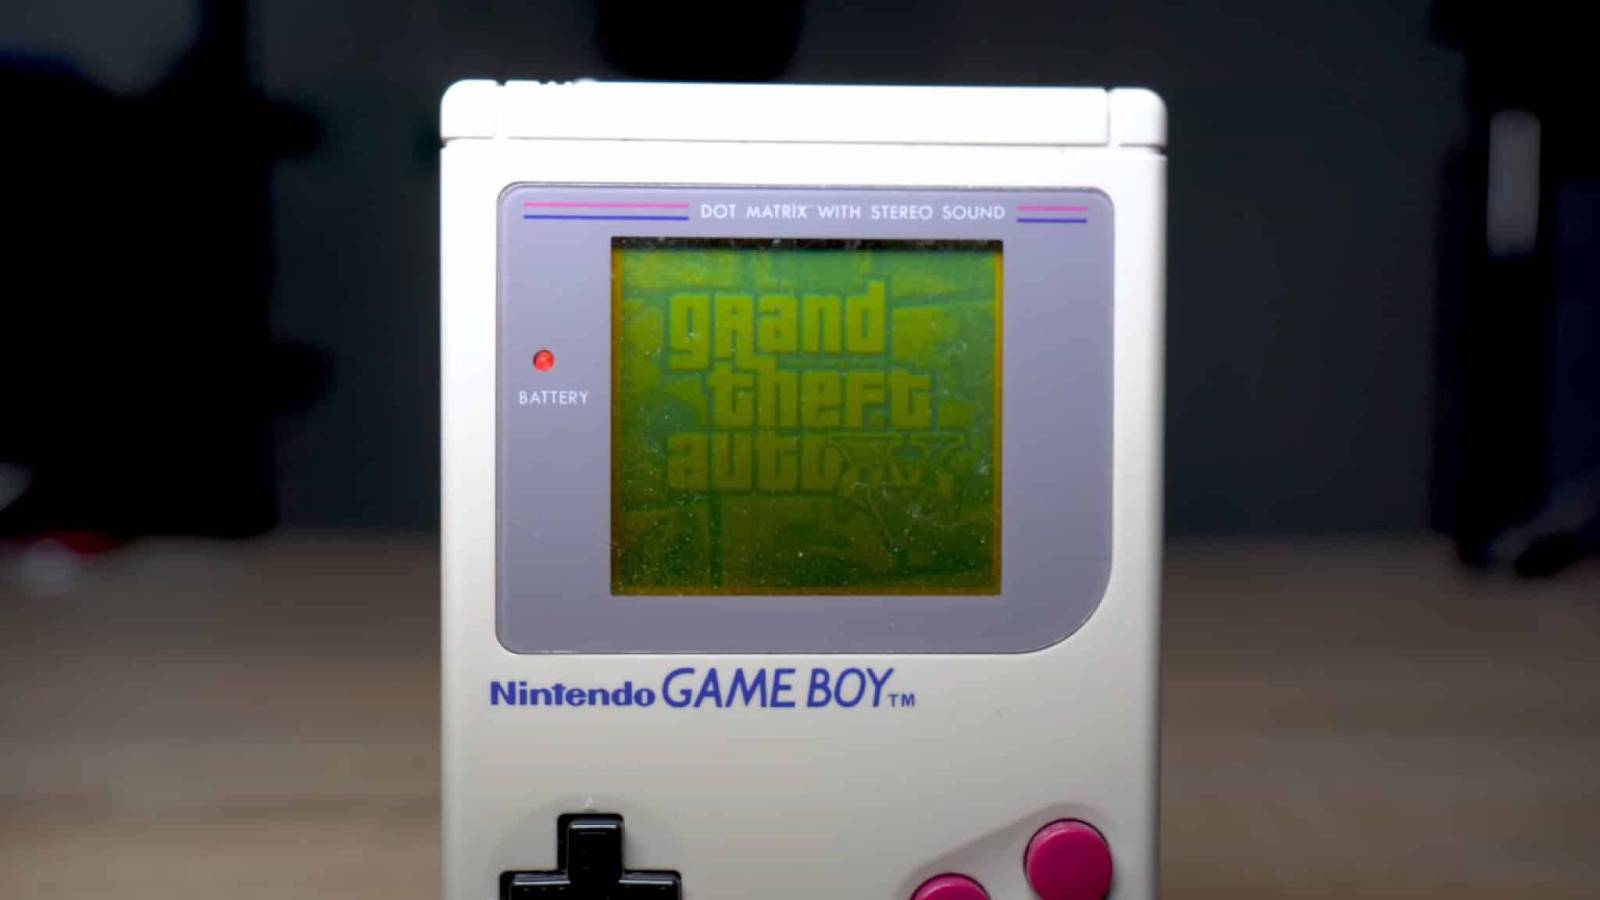 Game Boy original model playing GTA V